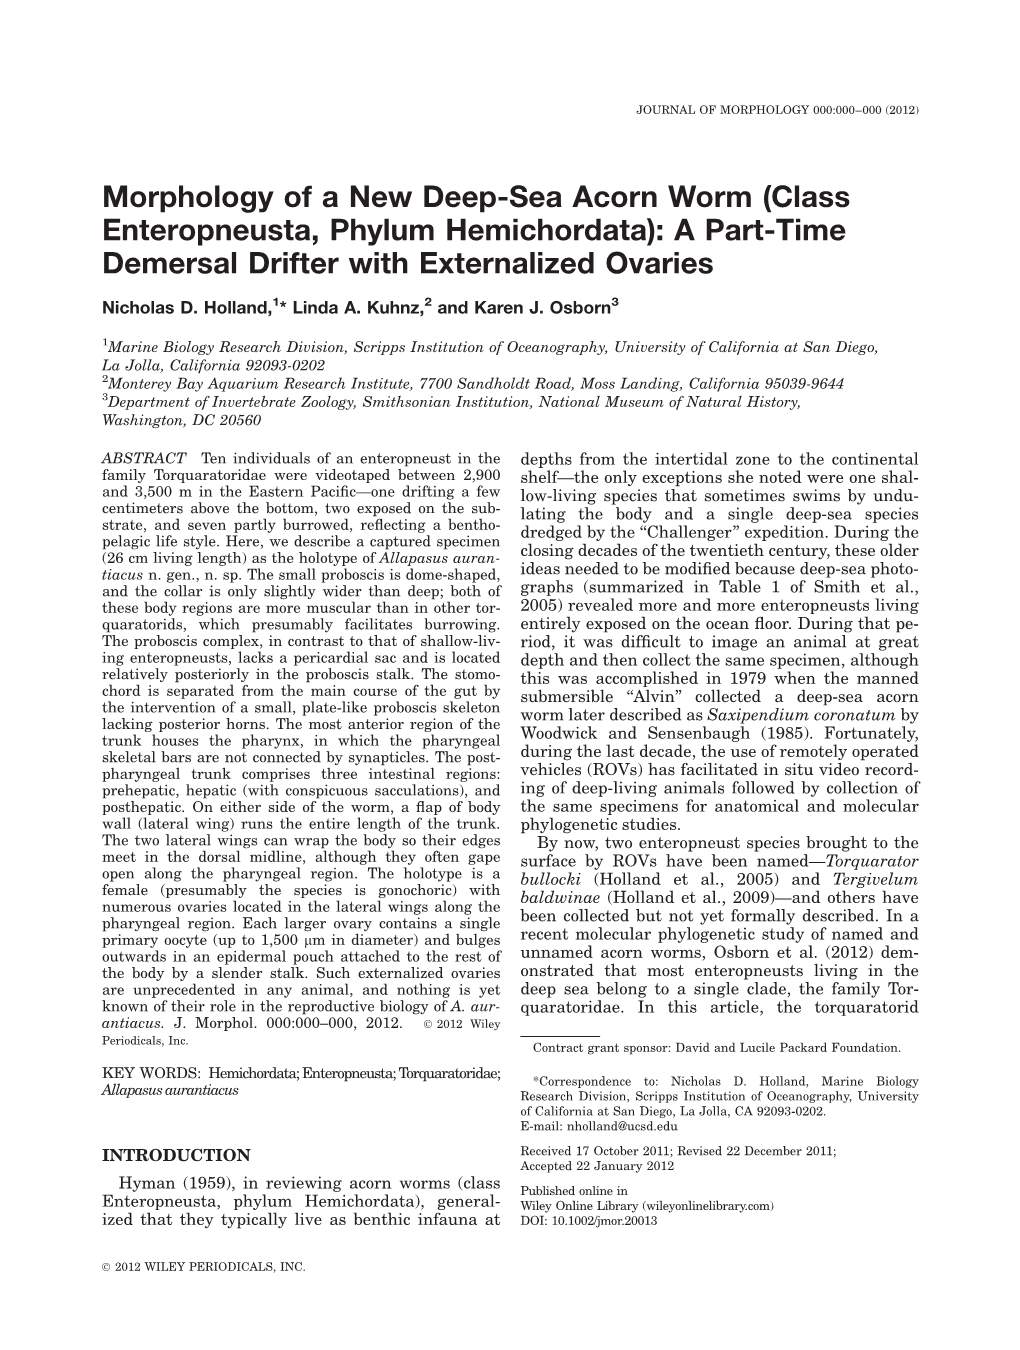 Morphology of a New Deepsea Acorn Worm (Class Enteropneusta, Phylum